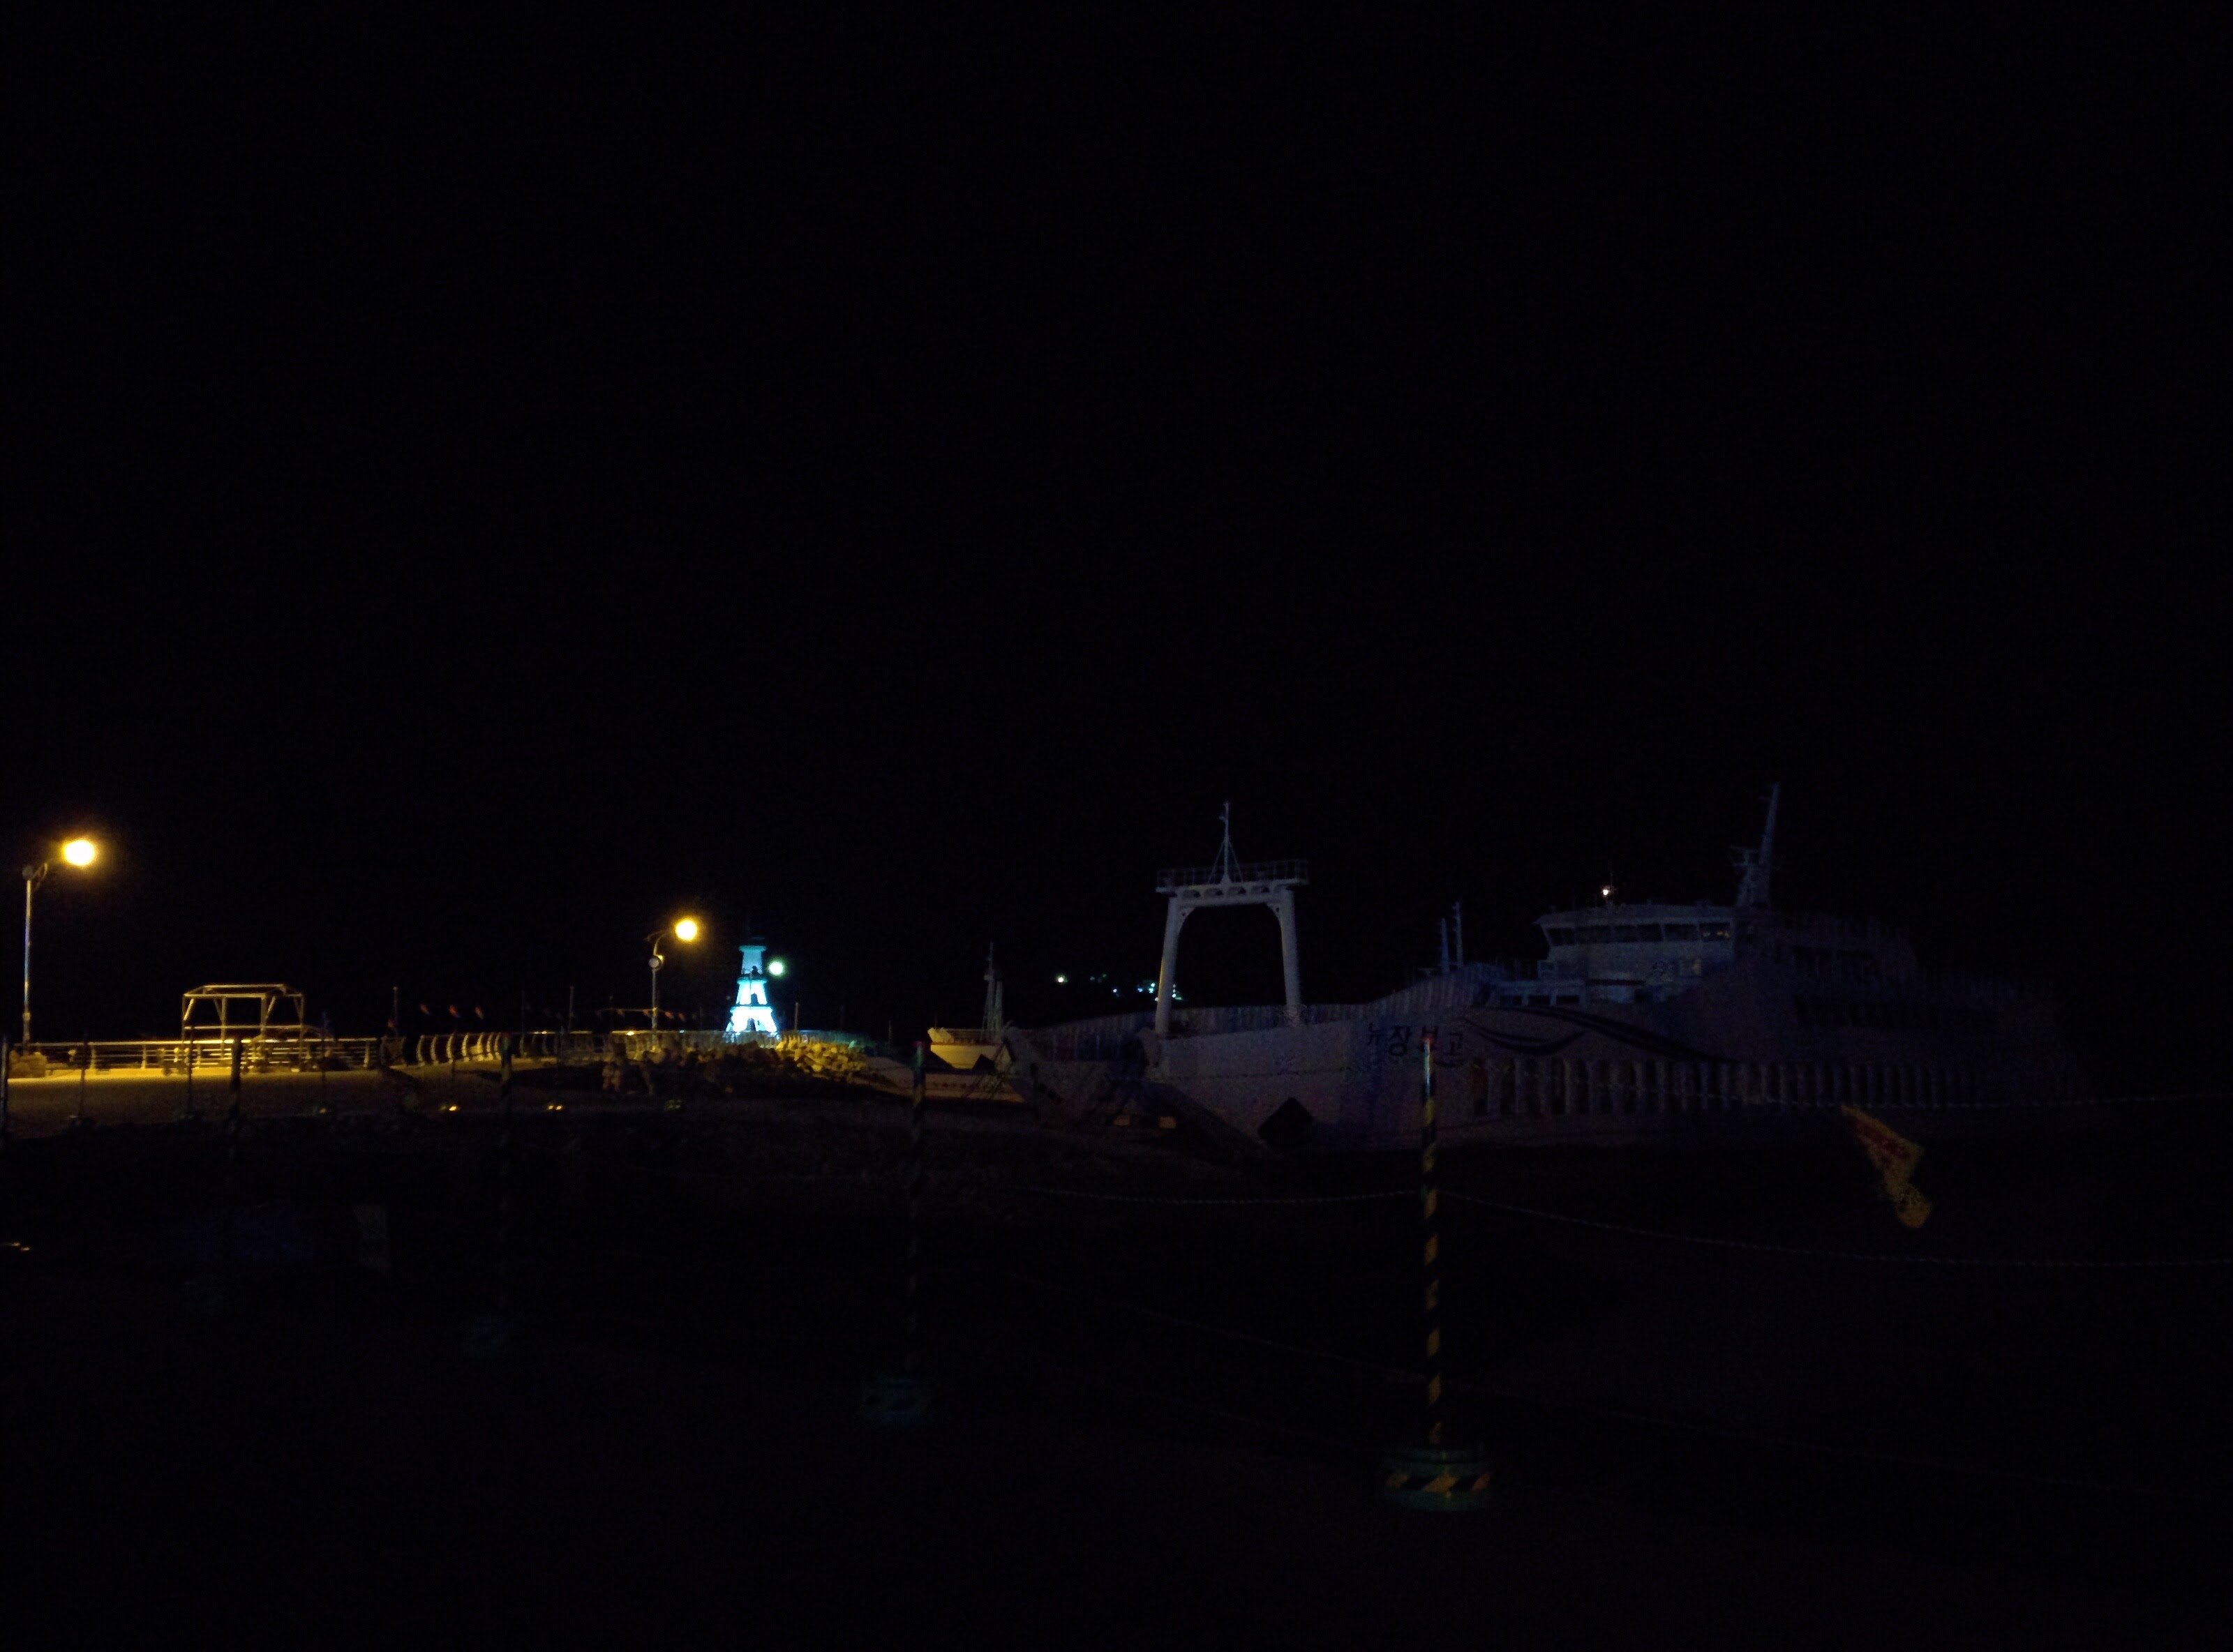 IMG_20151229_191301.jpg 땅끝마을관광지 야경... 배, 불빛